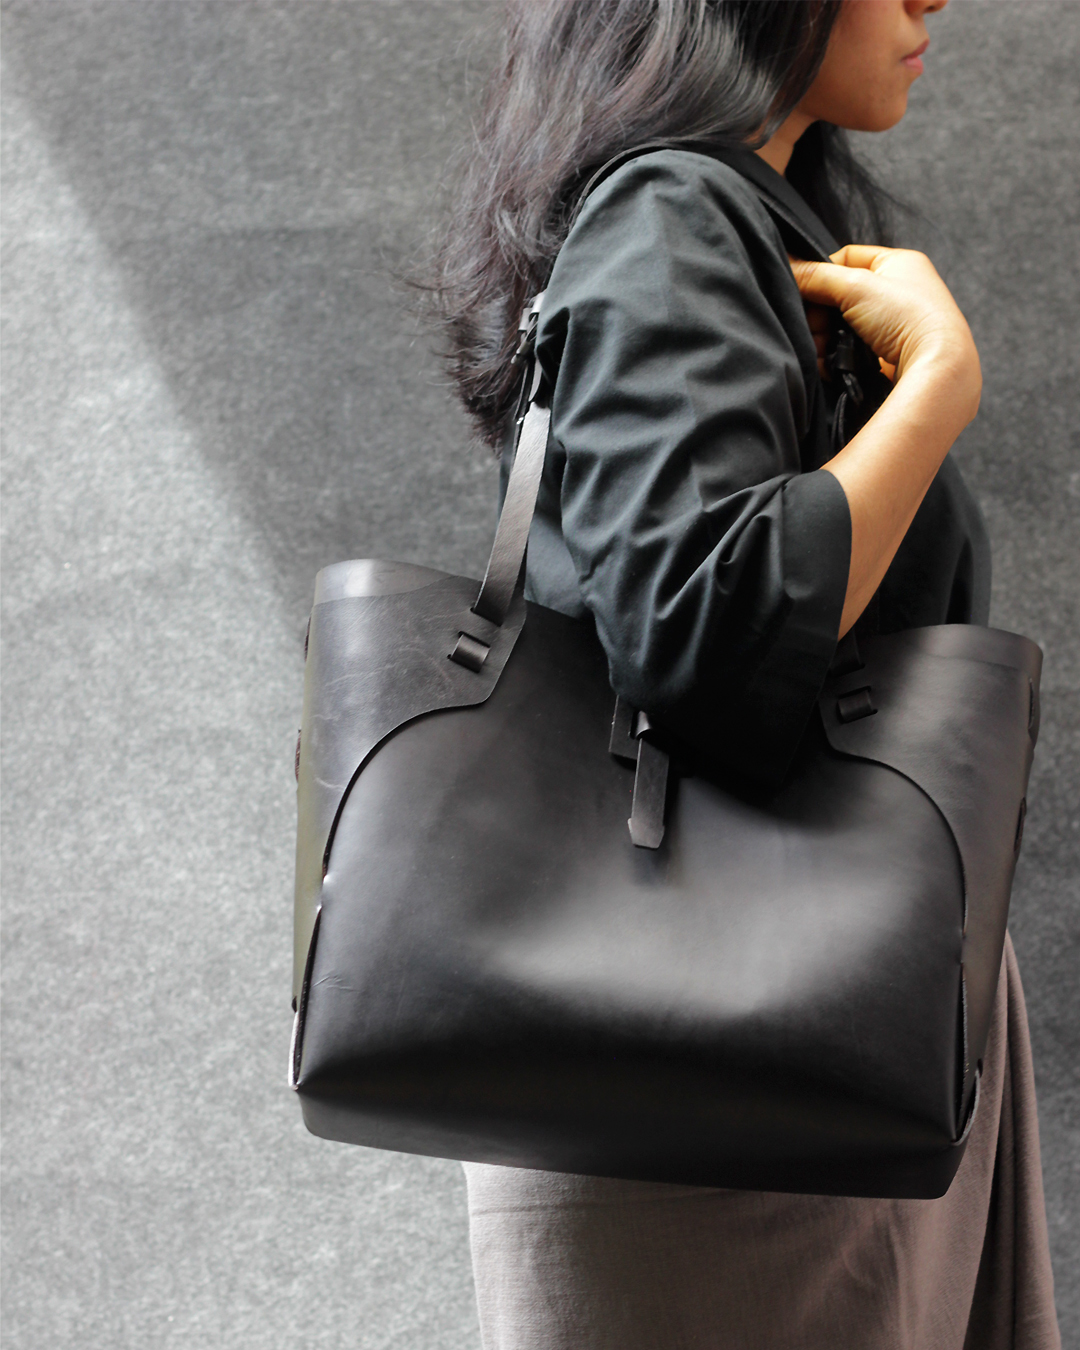 women leather bag